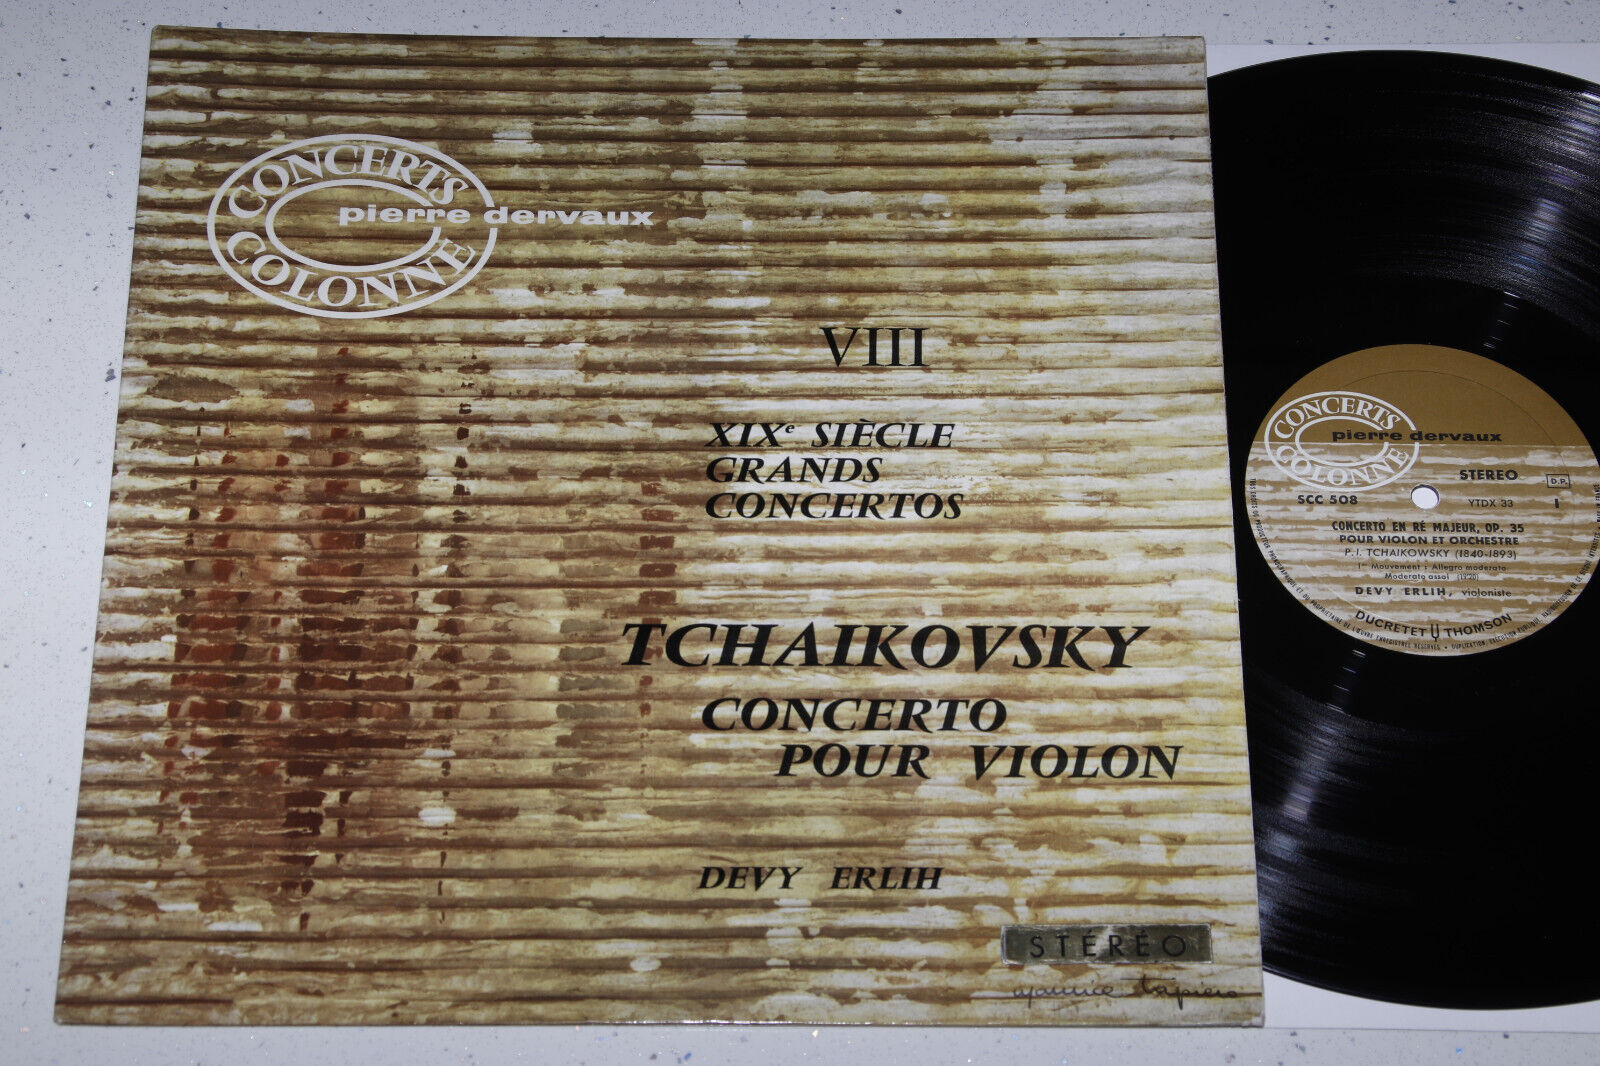 Pic 1 Ducretet Thomson SCC-508 Devy Erlih Tchaikovsky Violin Concerto STEREO ED1 NM